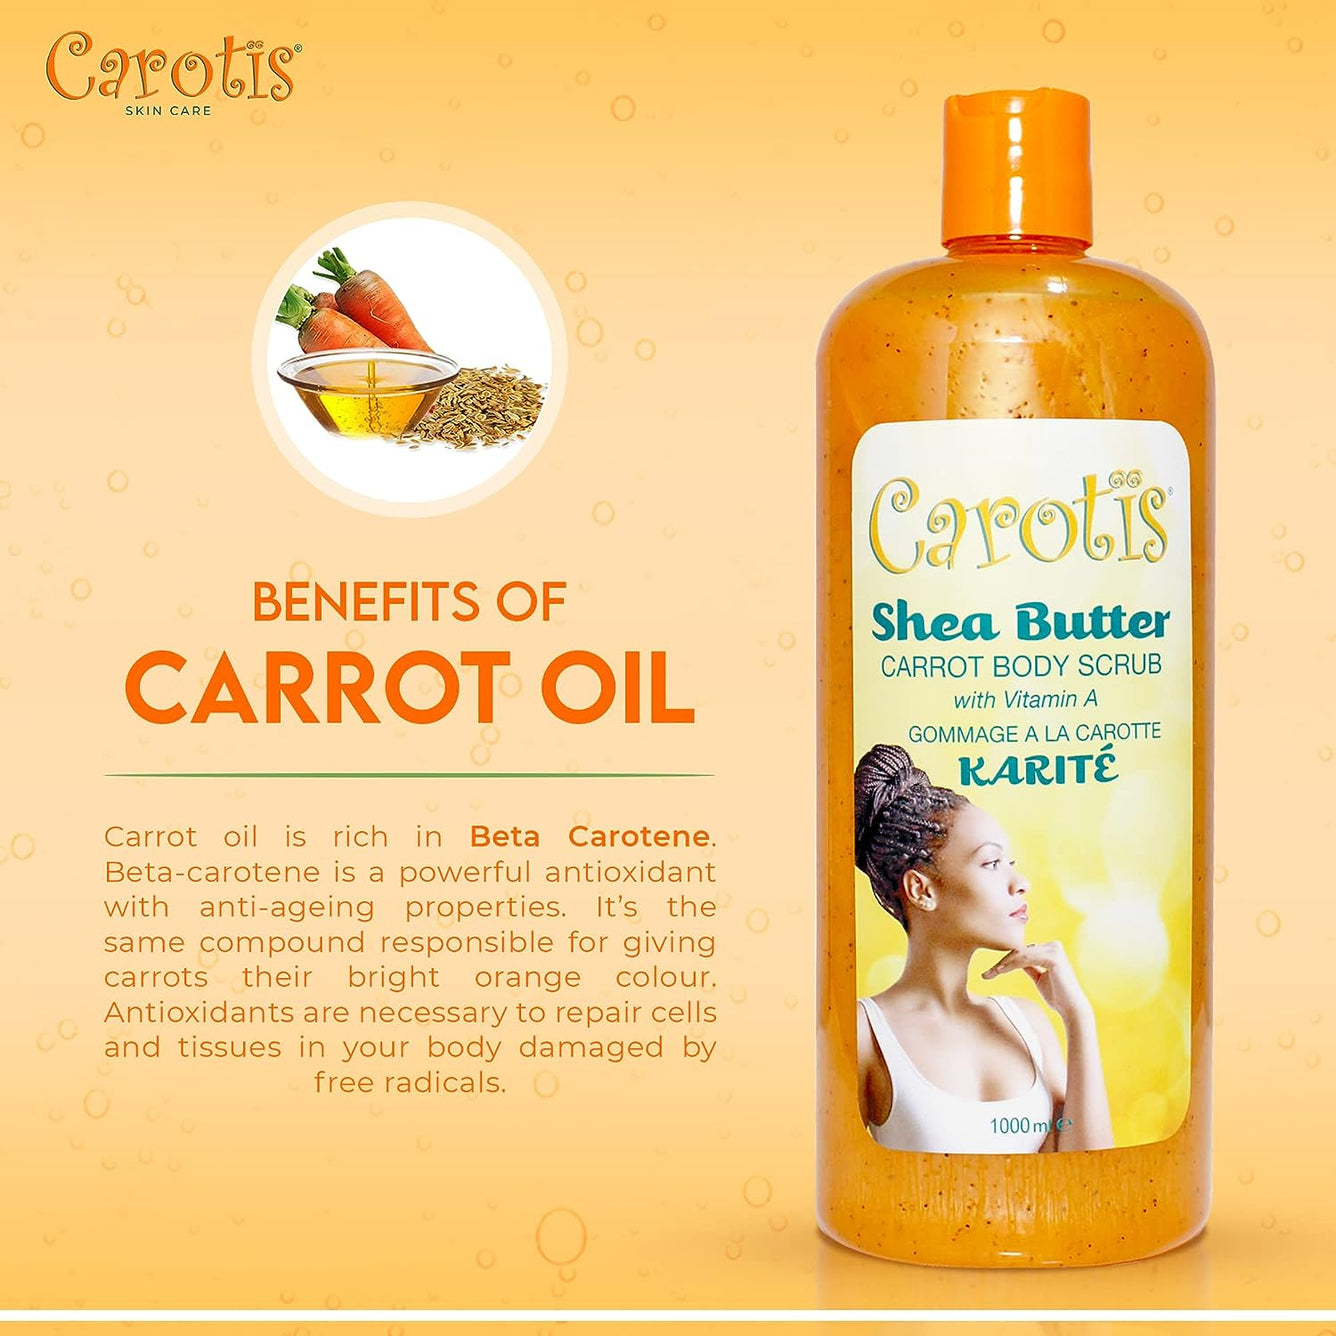 Carotis Shea Butter Body Scrub - With Vitamin A (Exfoliation) - 1000ml / 35 fl oz Carotis - Mitchell Brands - Skin Lightening, Skin Brightening, Fade Dark Spots, Shea Butter, Hair Growth Products